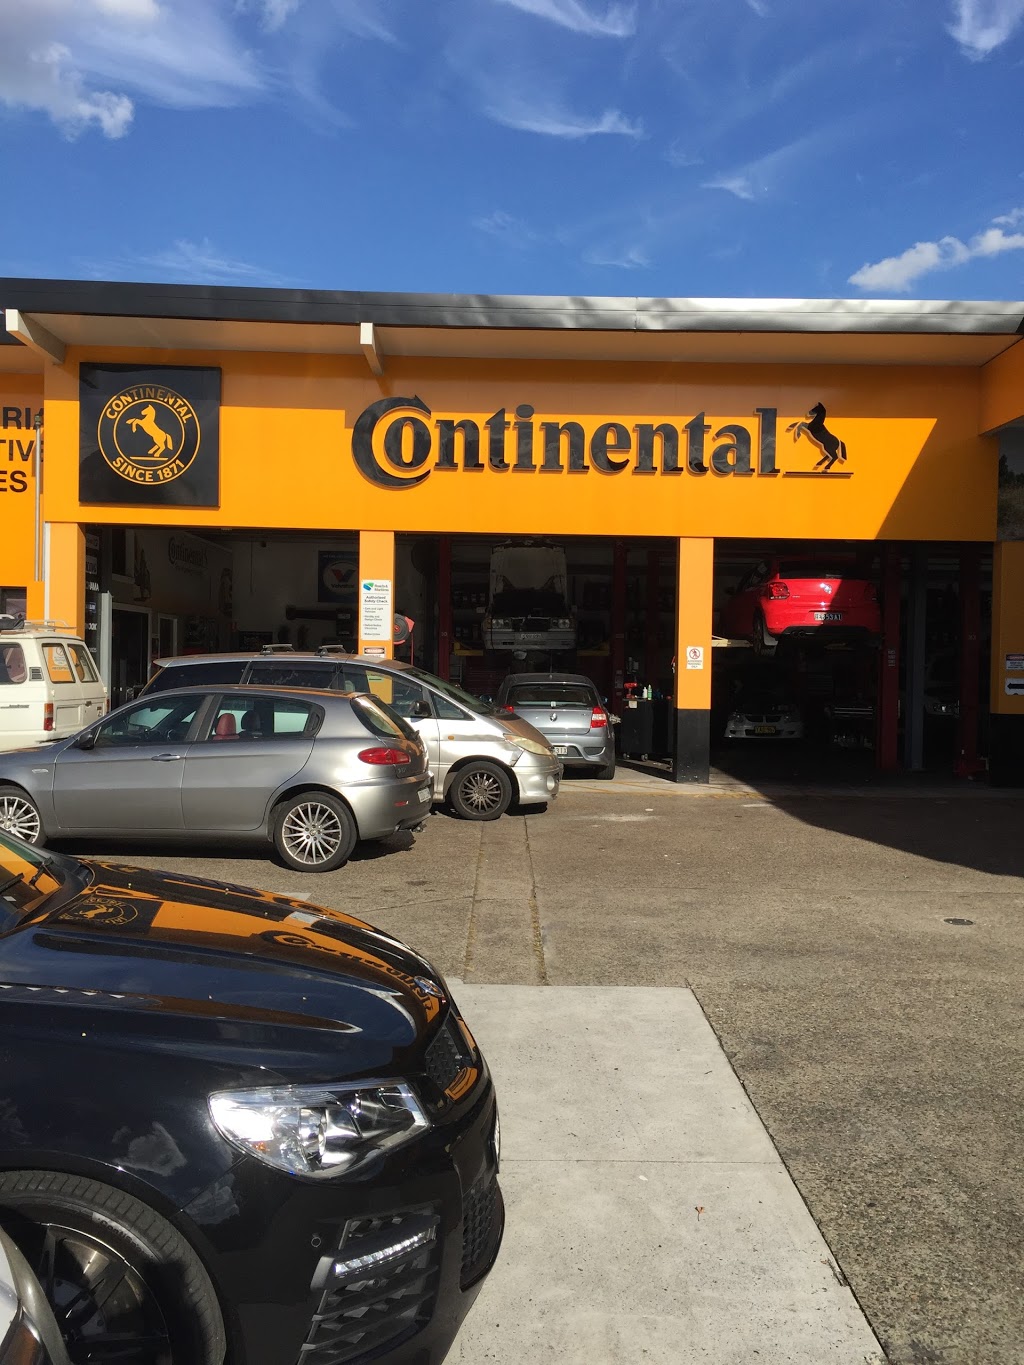 Alexandria Automotive Services | car repair | 36/42 Henderson Rd, Alexandria NSW 2015, Australia | 0296998831 OR +61 2 9699 8831